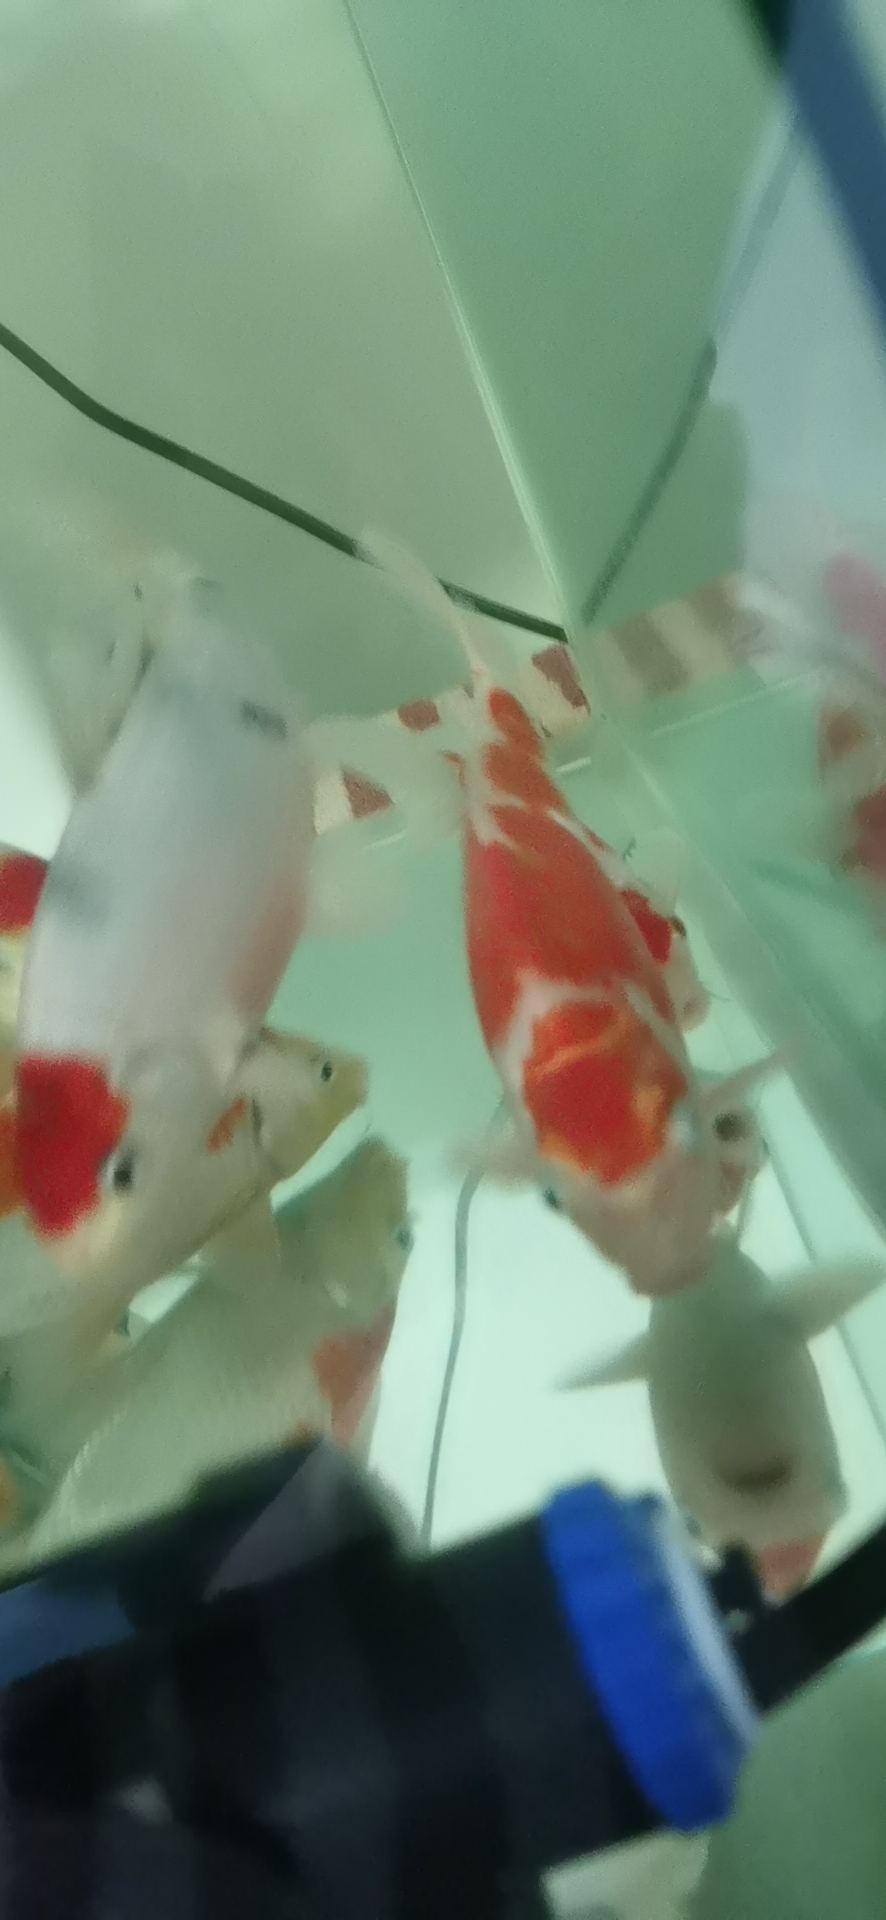 After a simple white spot disease Thick frame red dragon fish ASIAN AROWANA,AROWANA,STINGRAY The1sheet